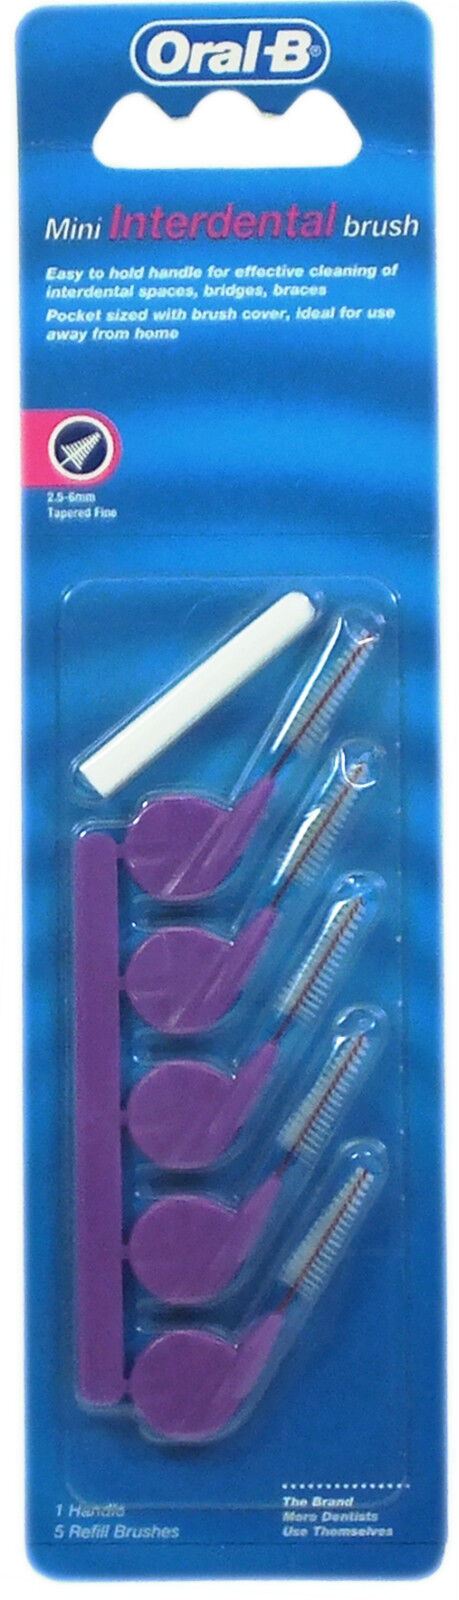 Braun Oral B Mini Interdental Brushes 2.5 -6mm Tapered Fine